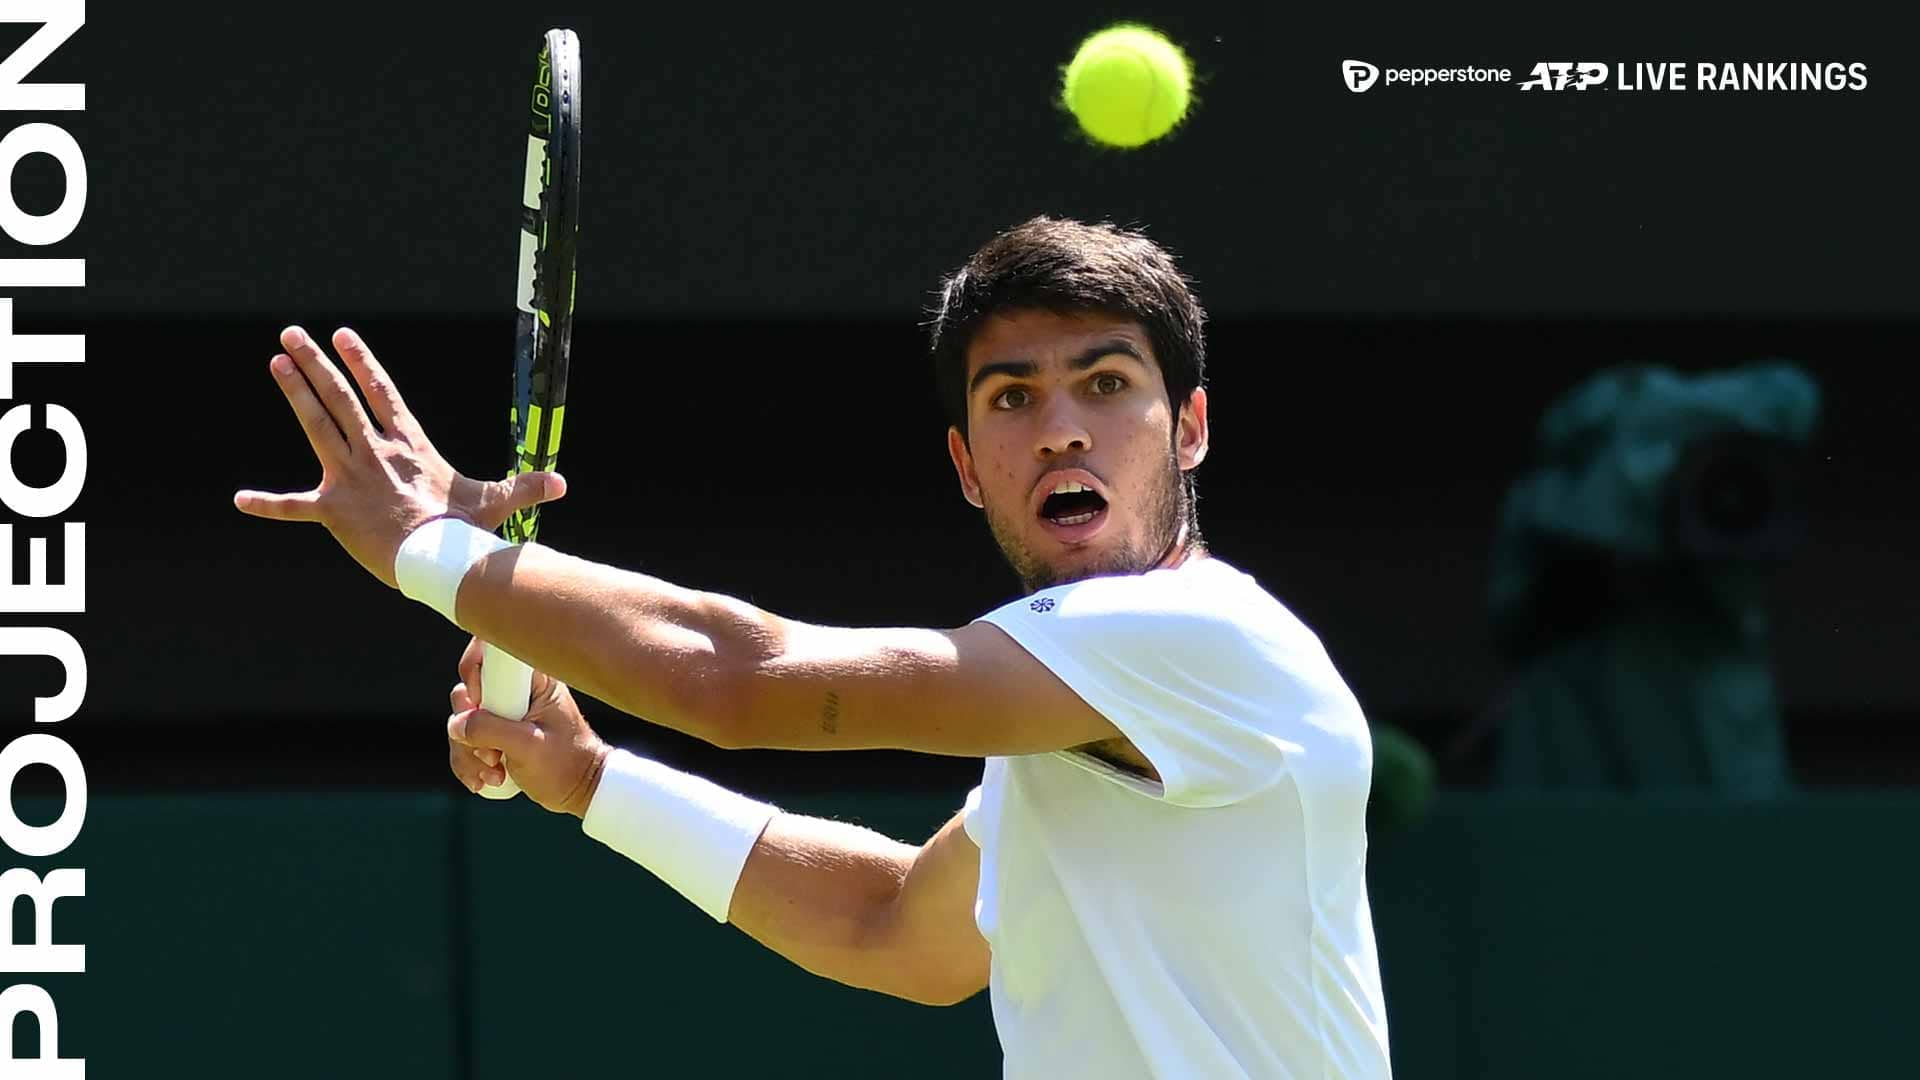 Will Carlos Alcaraz Or Novak Djokovic Leave Wimbledon World No. 1